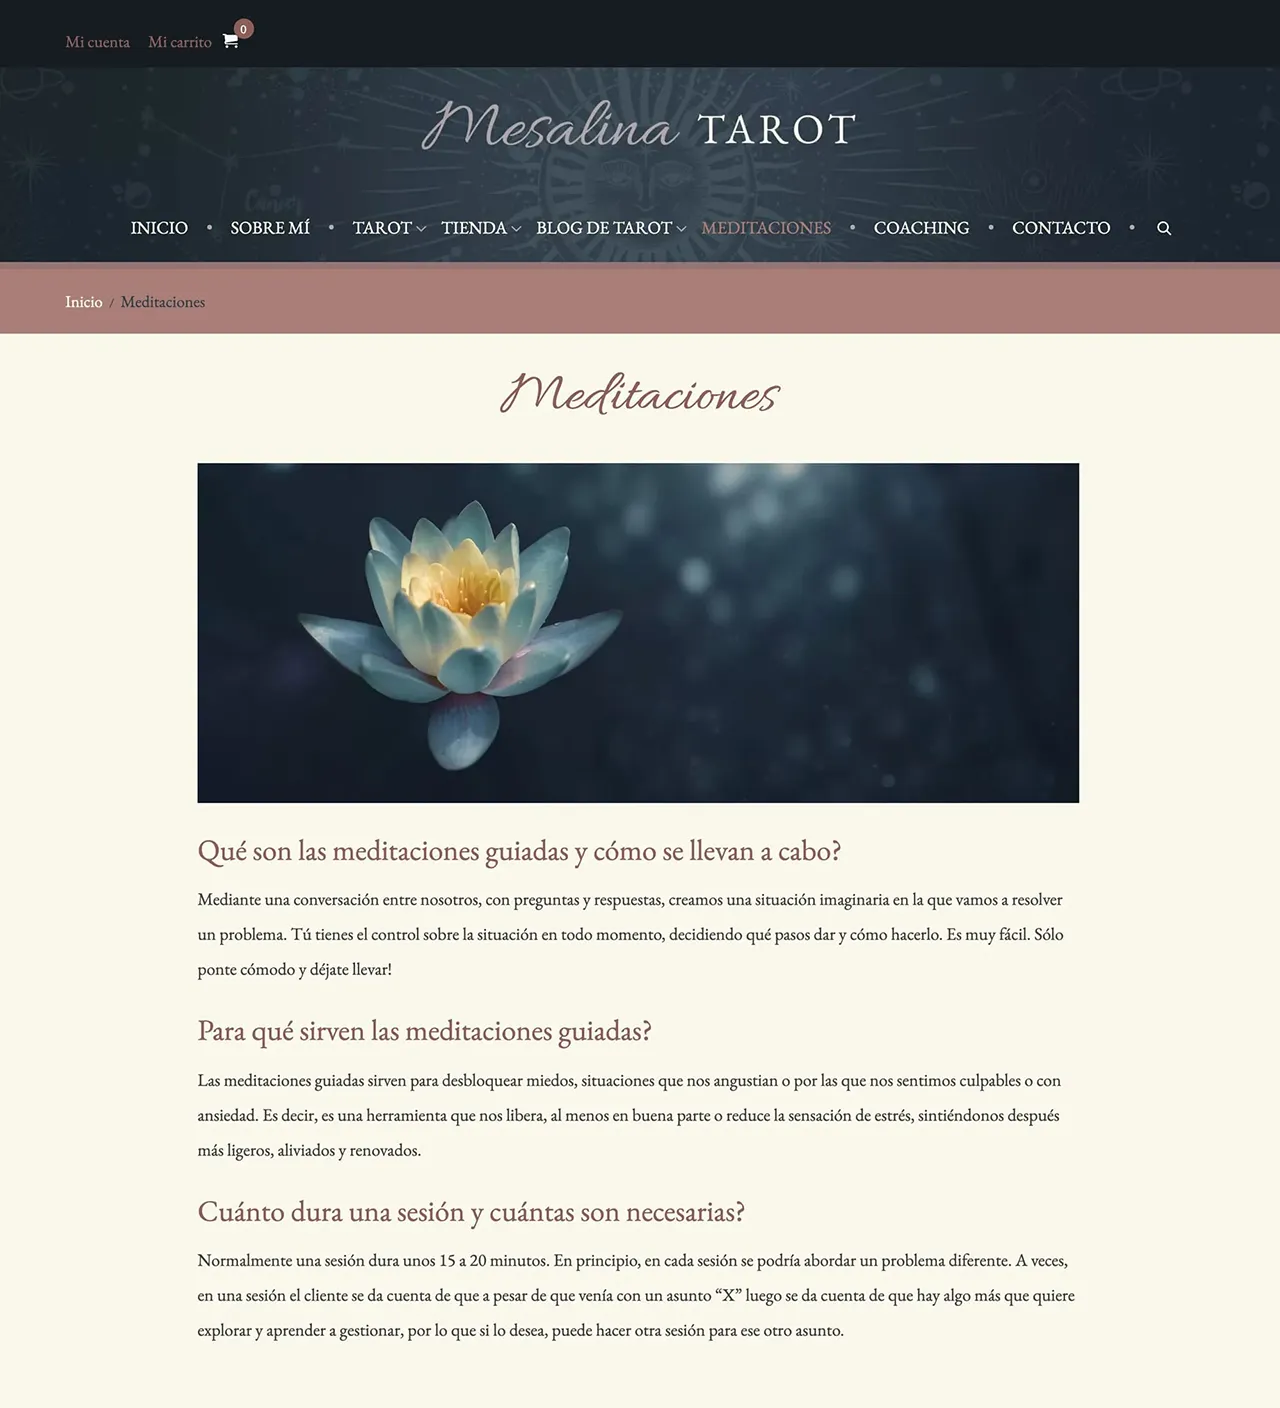 Mesalina Tarot Meditation website page